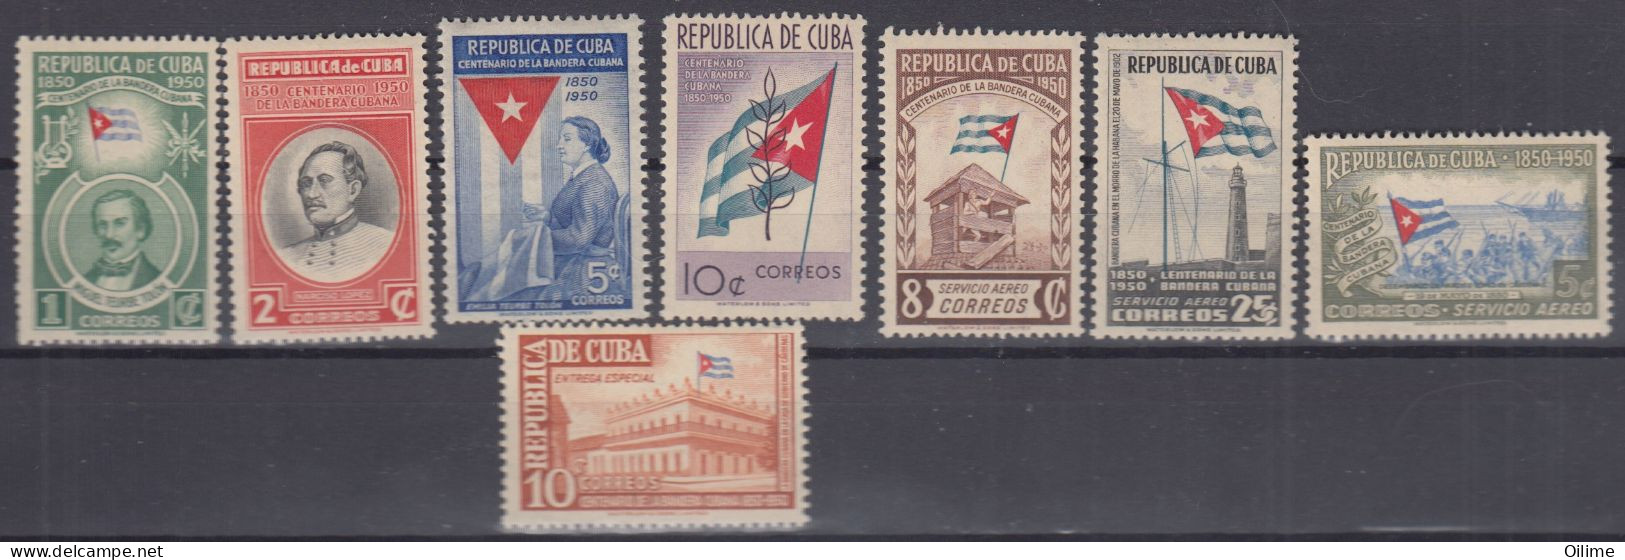 CUBA 1951. CENTENARIO DE LA BANDERA CUBANA. MNH. EDIFIL 445/52  FLAG - Nuevos